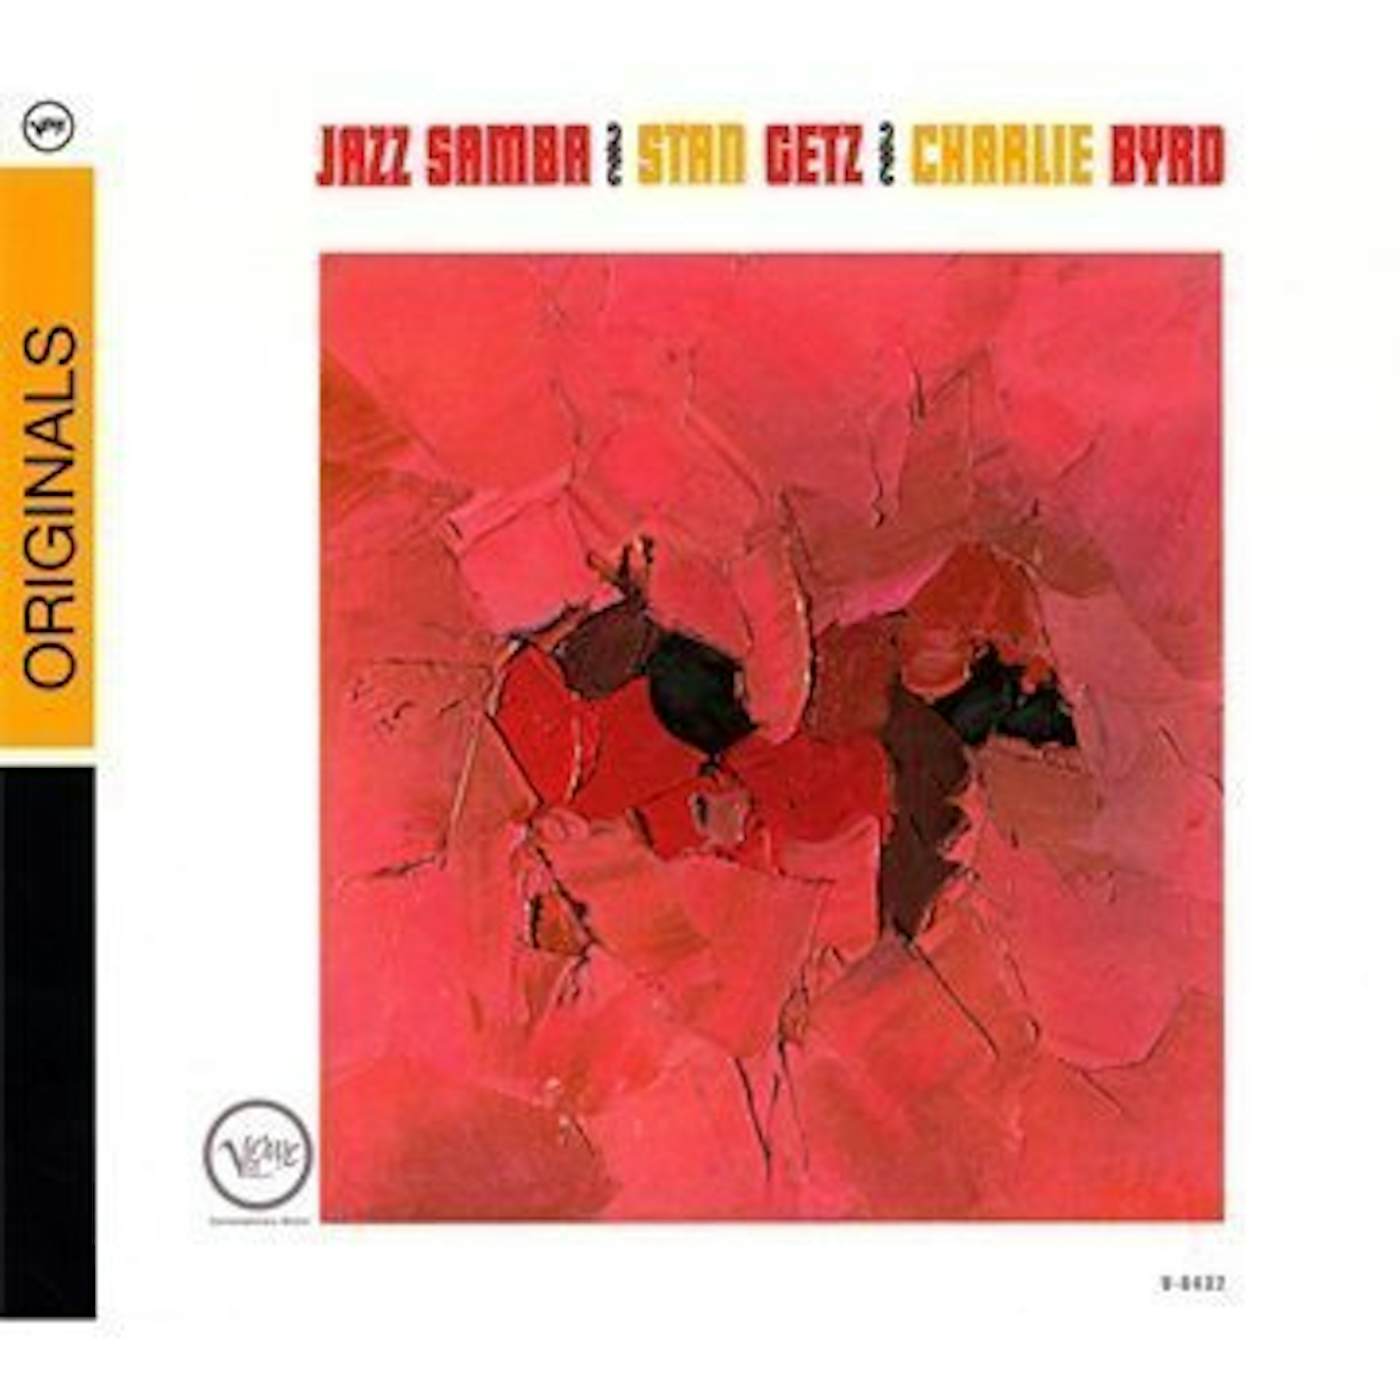 Stan Getz & Charlie Byrd JAZZ SAMBA  (BONUS TRACK) Vinyl Record - Blue Vinyl, Colored Vinyl, Limited Edition, 180 Gram Pressing